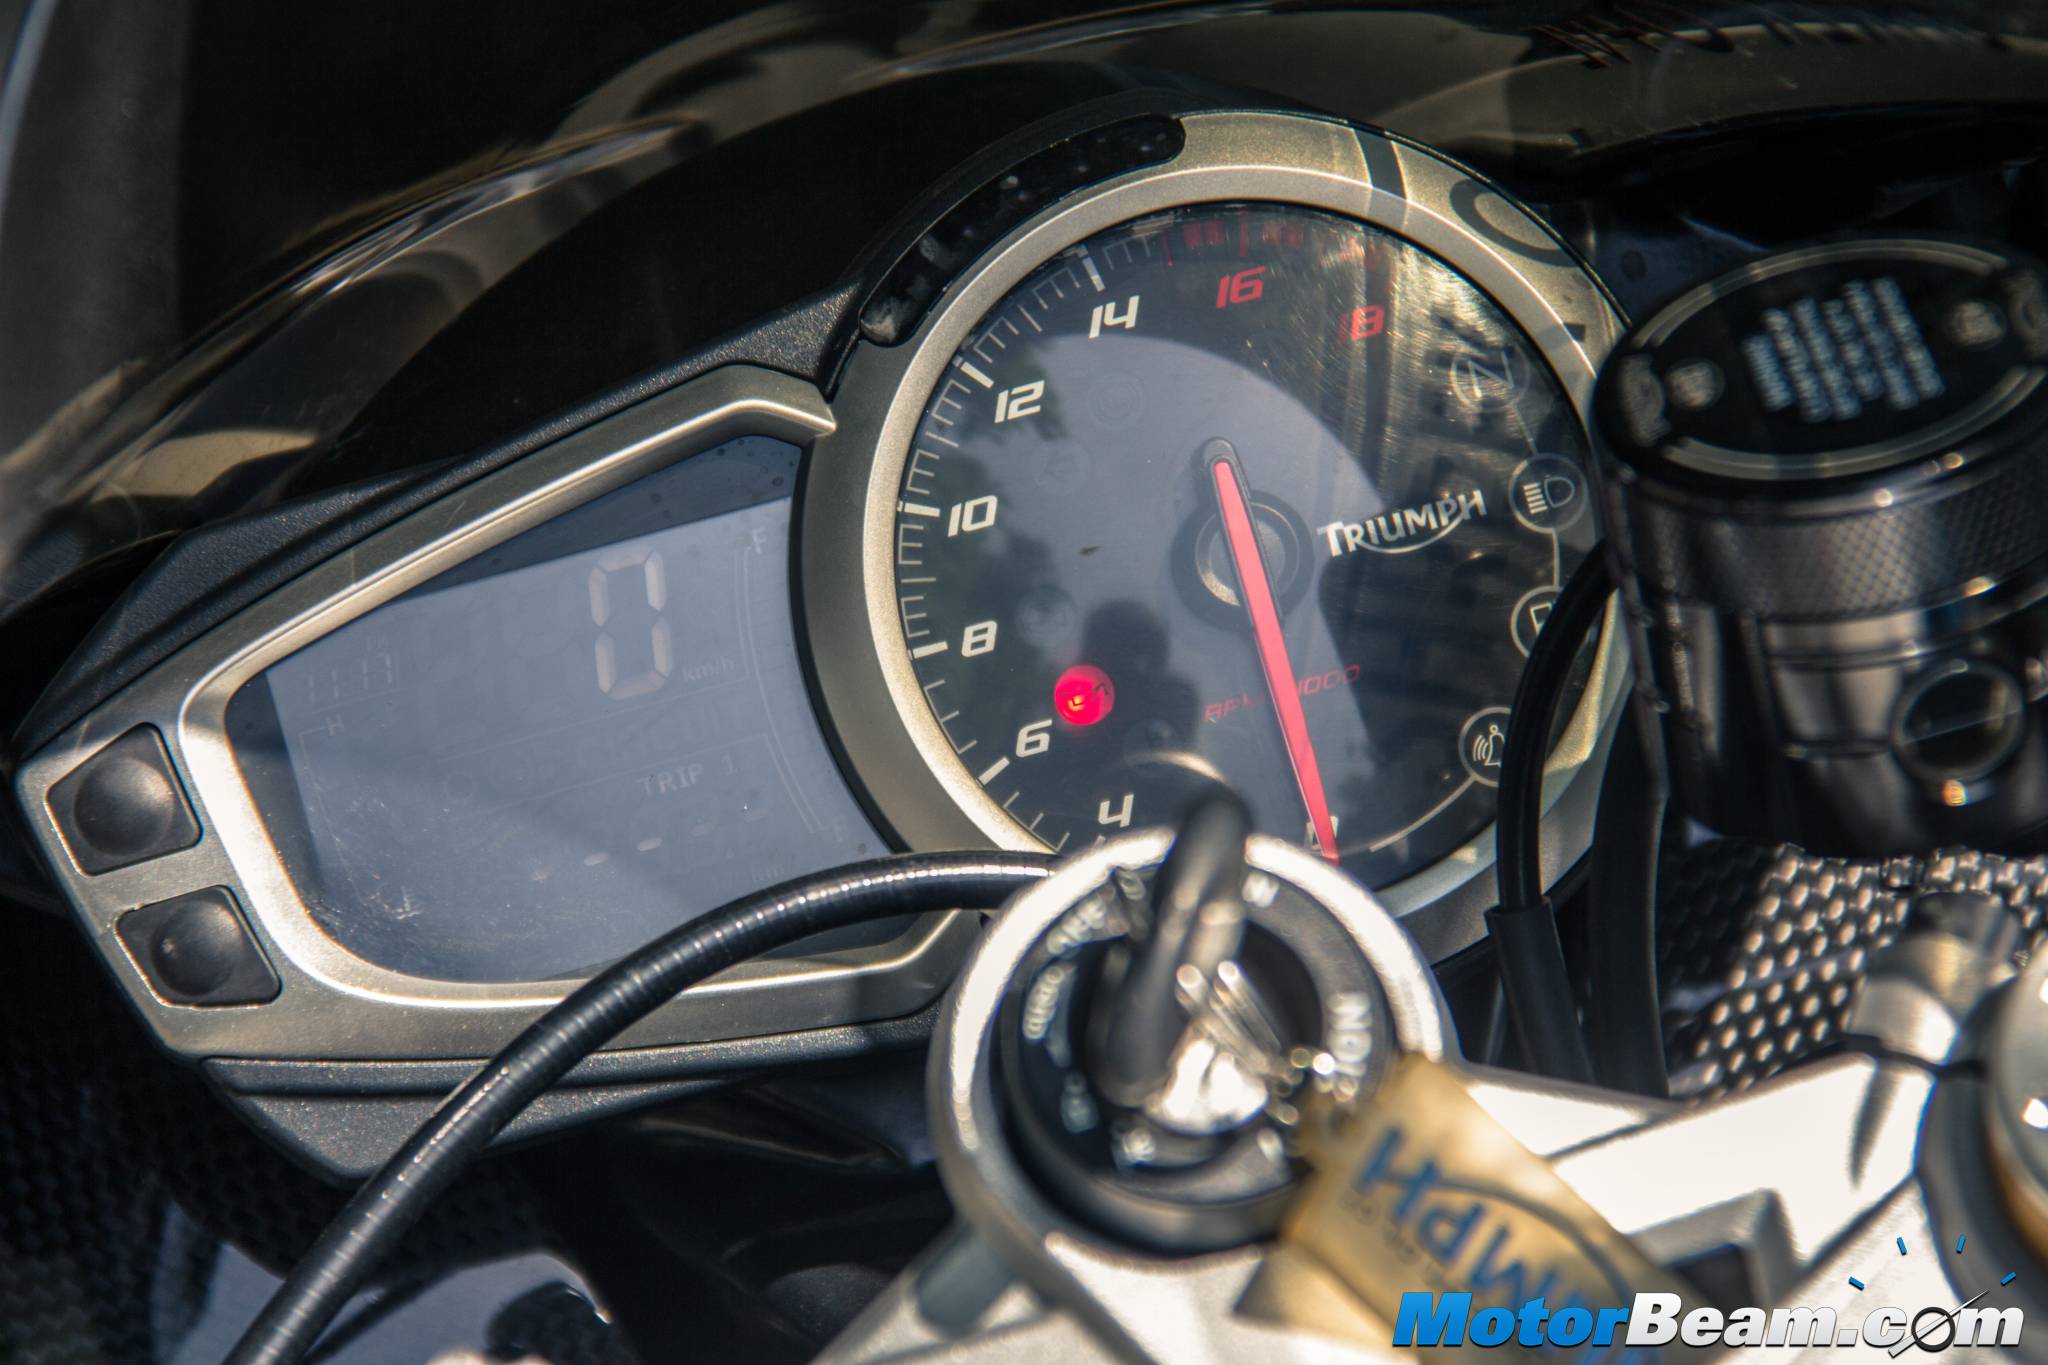 Honda CBR650F vs Triumph Daytona 675R